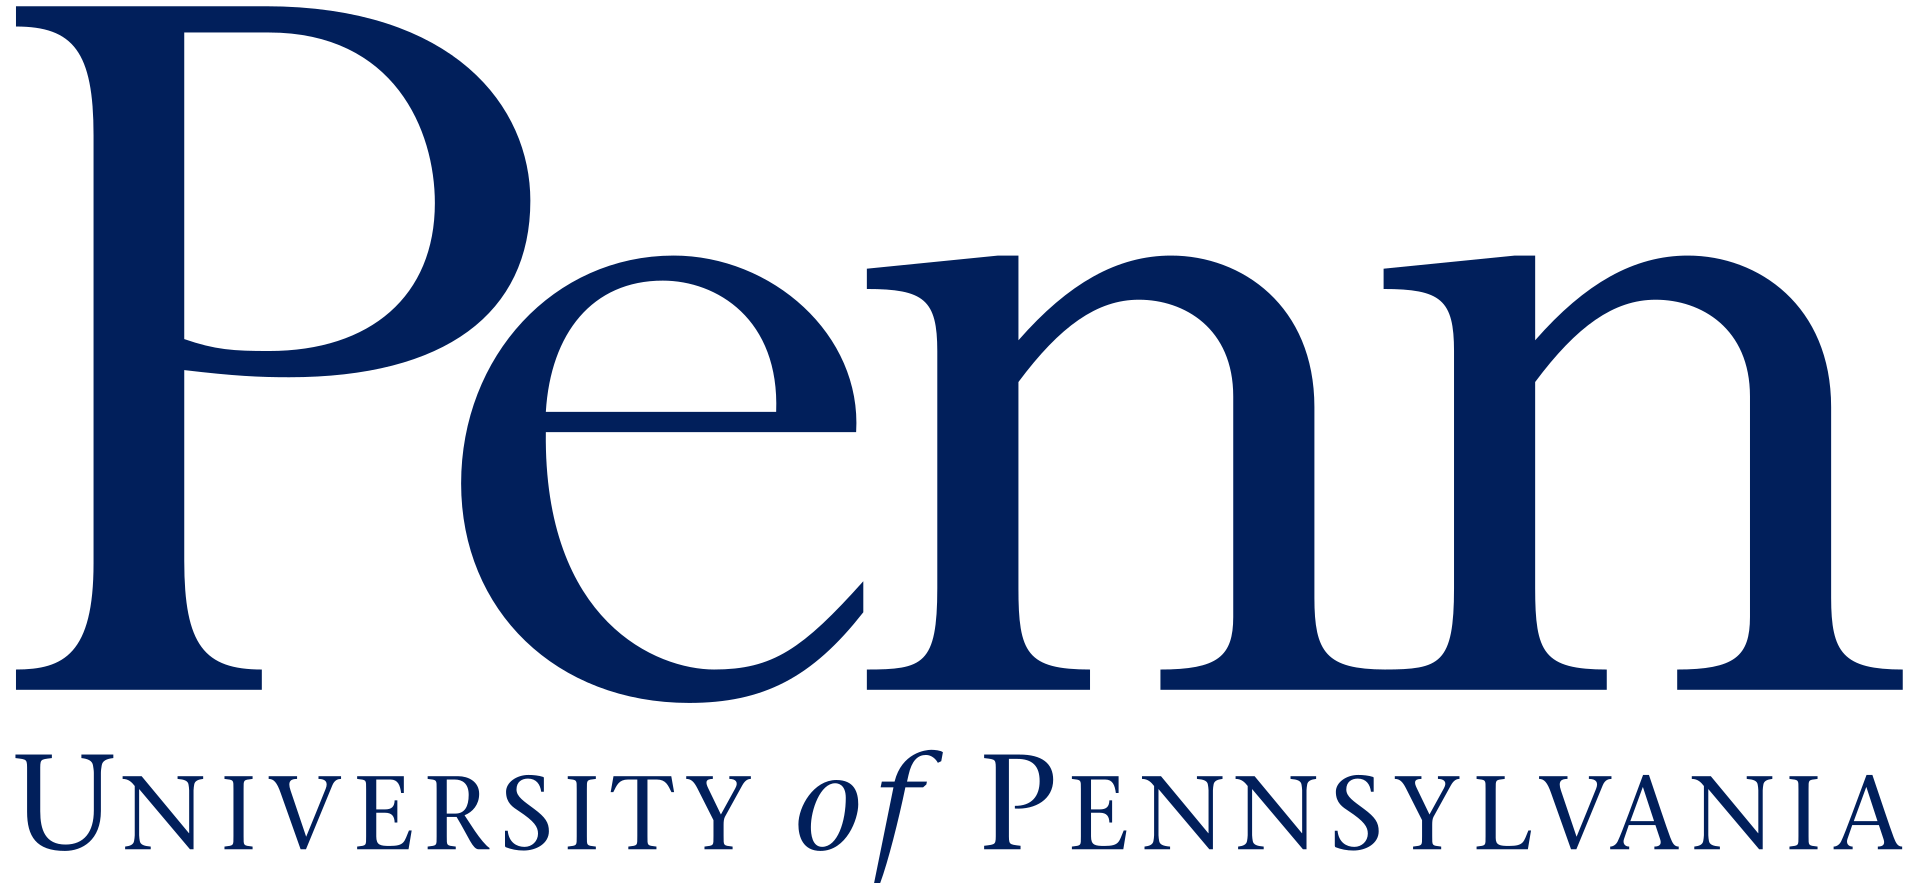 University of Pennsylvania's Image